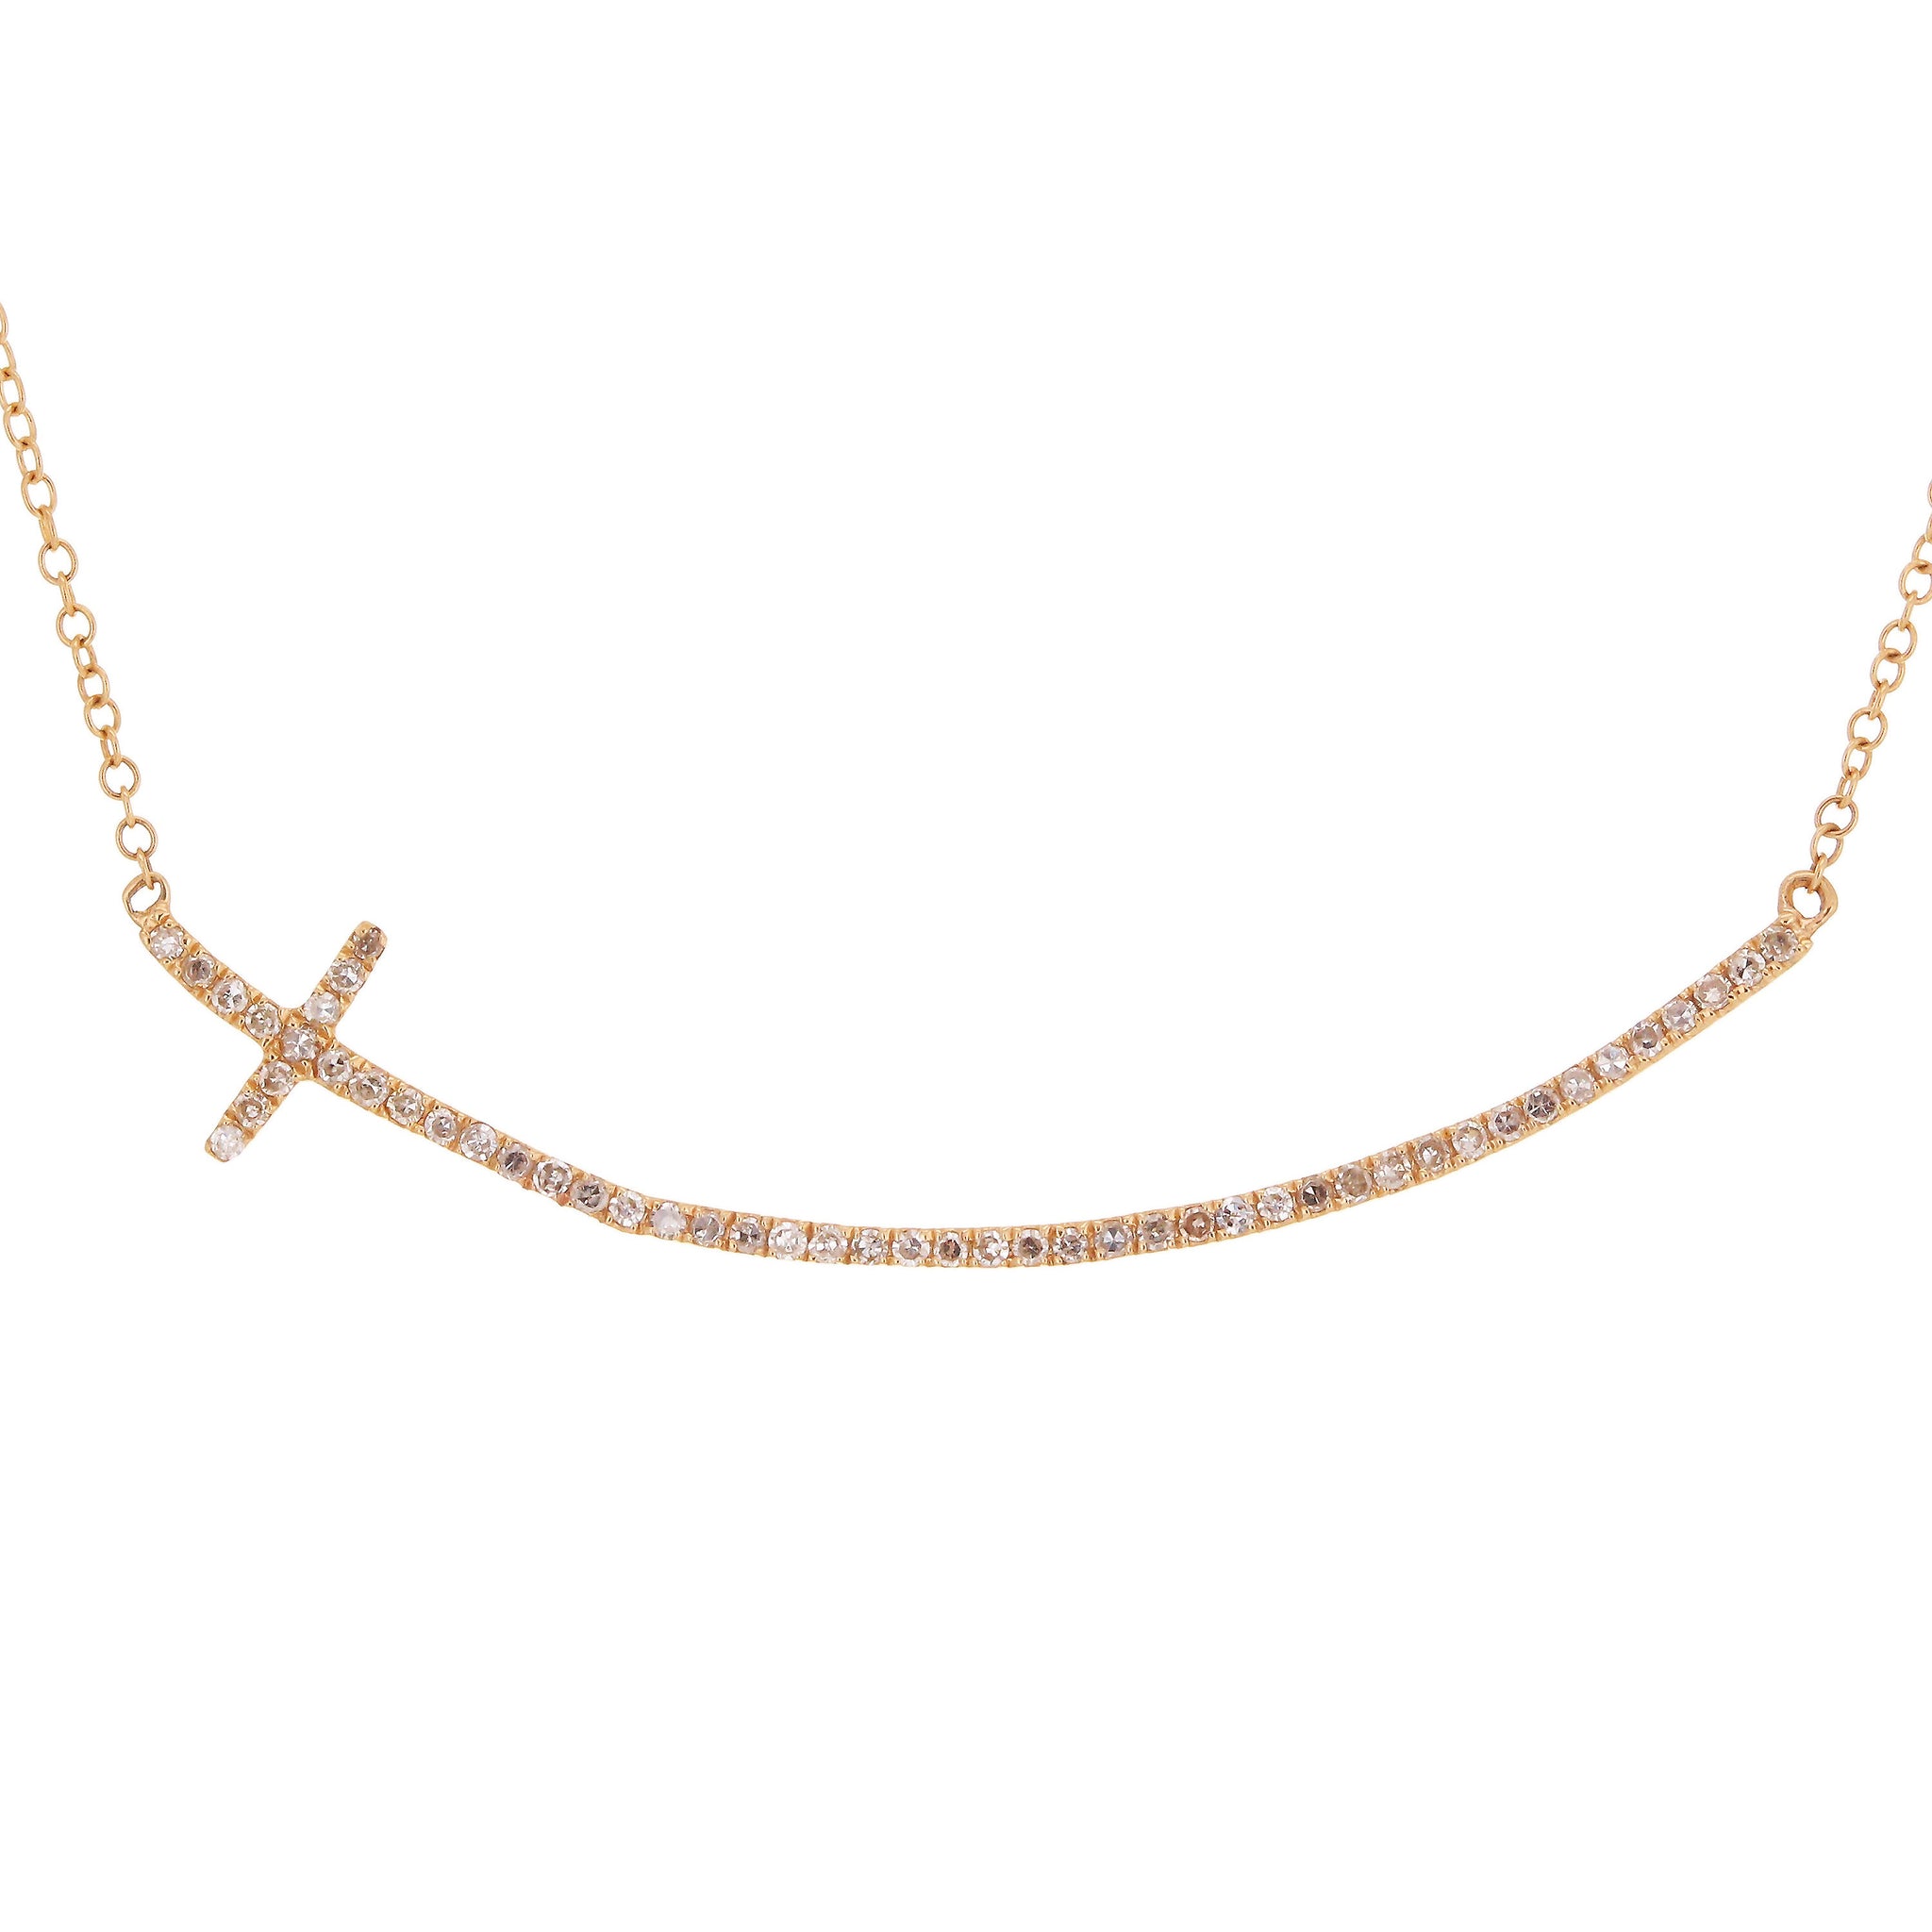 Sterling silver Rose Gold sideways cross pendant necklace Choker 16-18